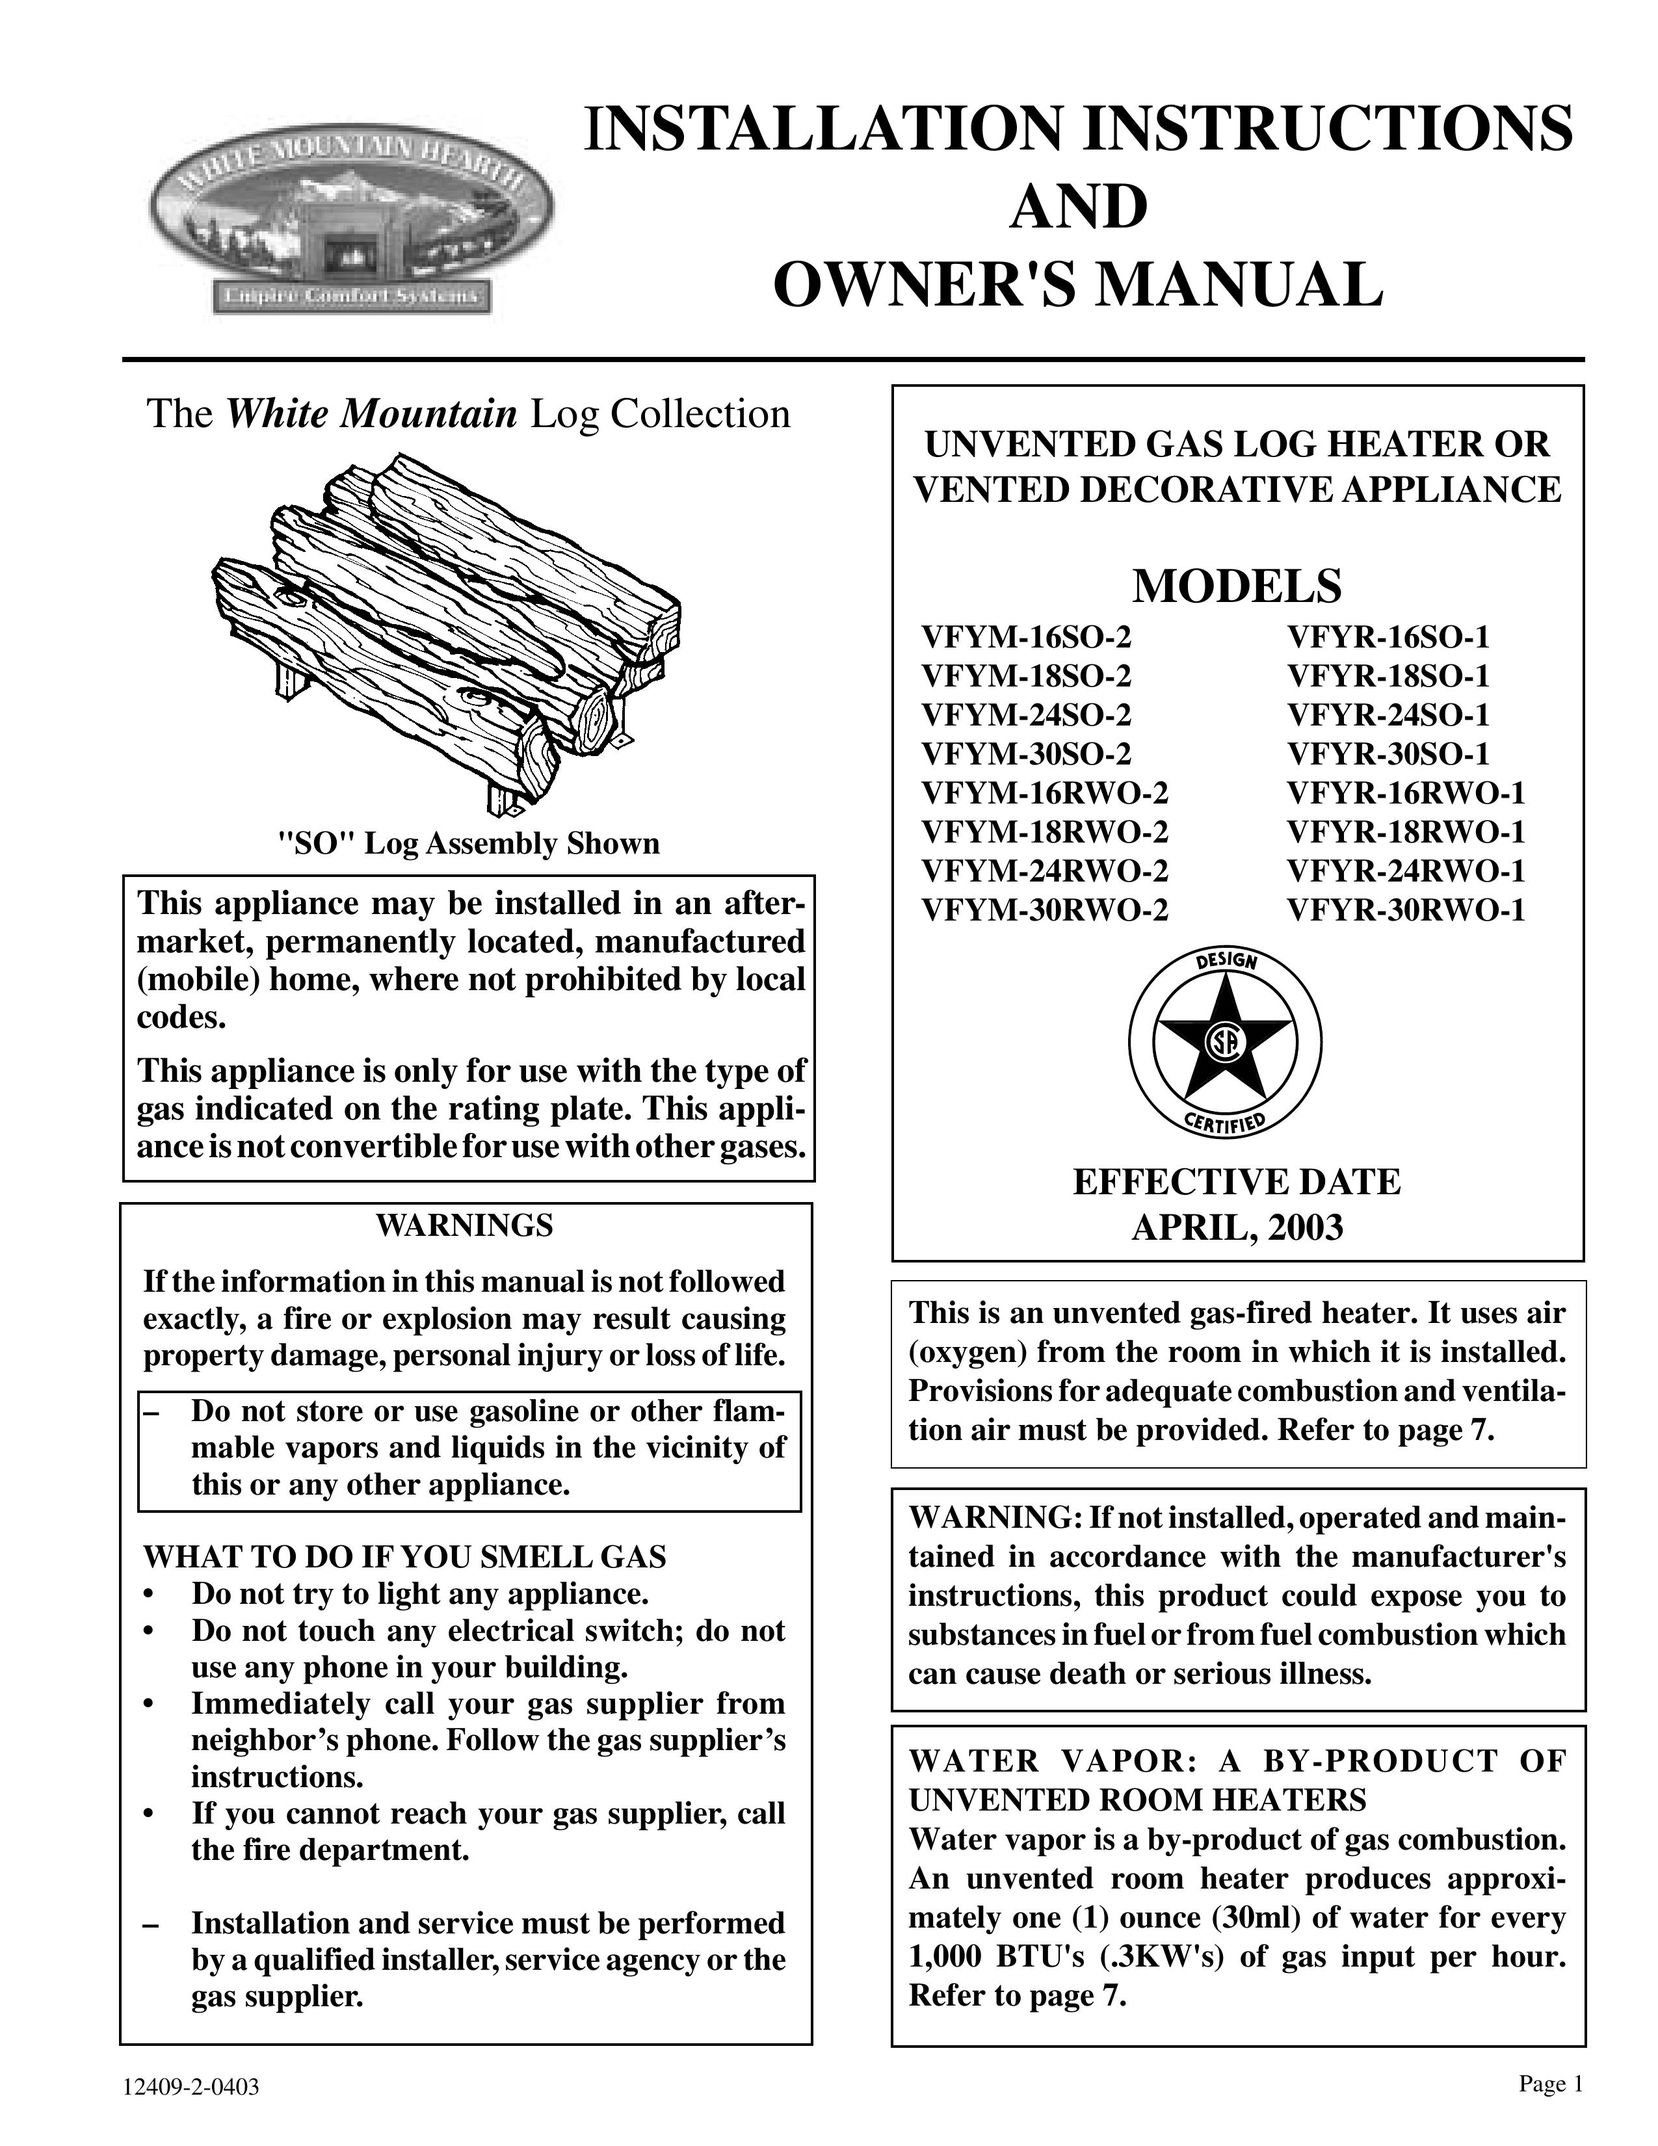 Empire Comfort Systems VFYR-16RWO-1 Water Heater User Manual